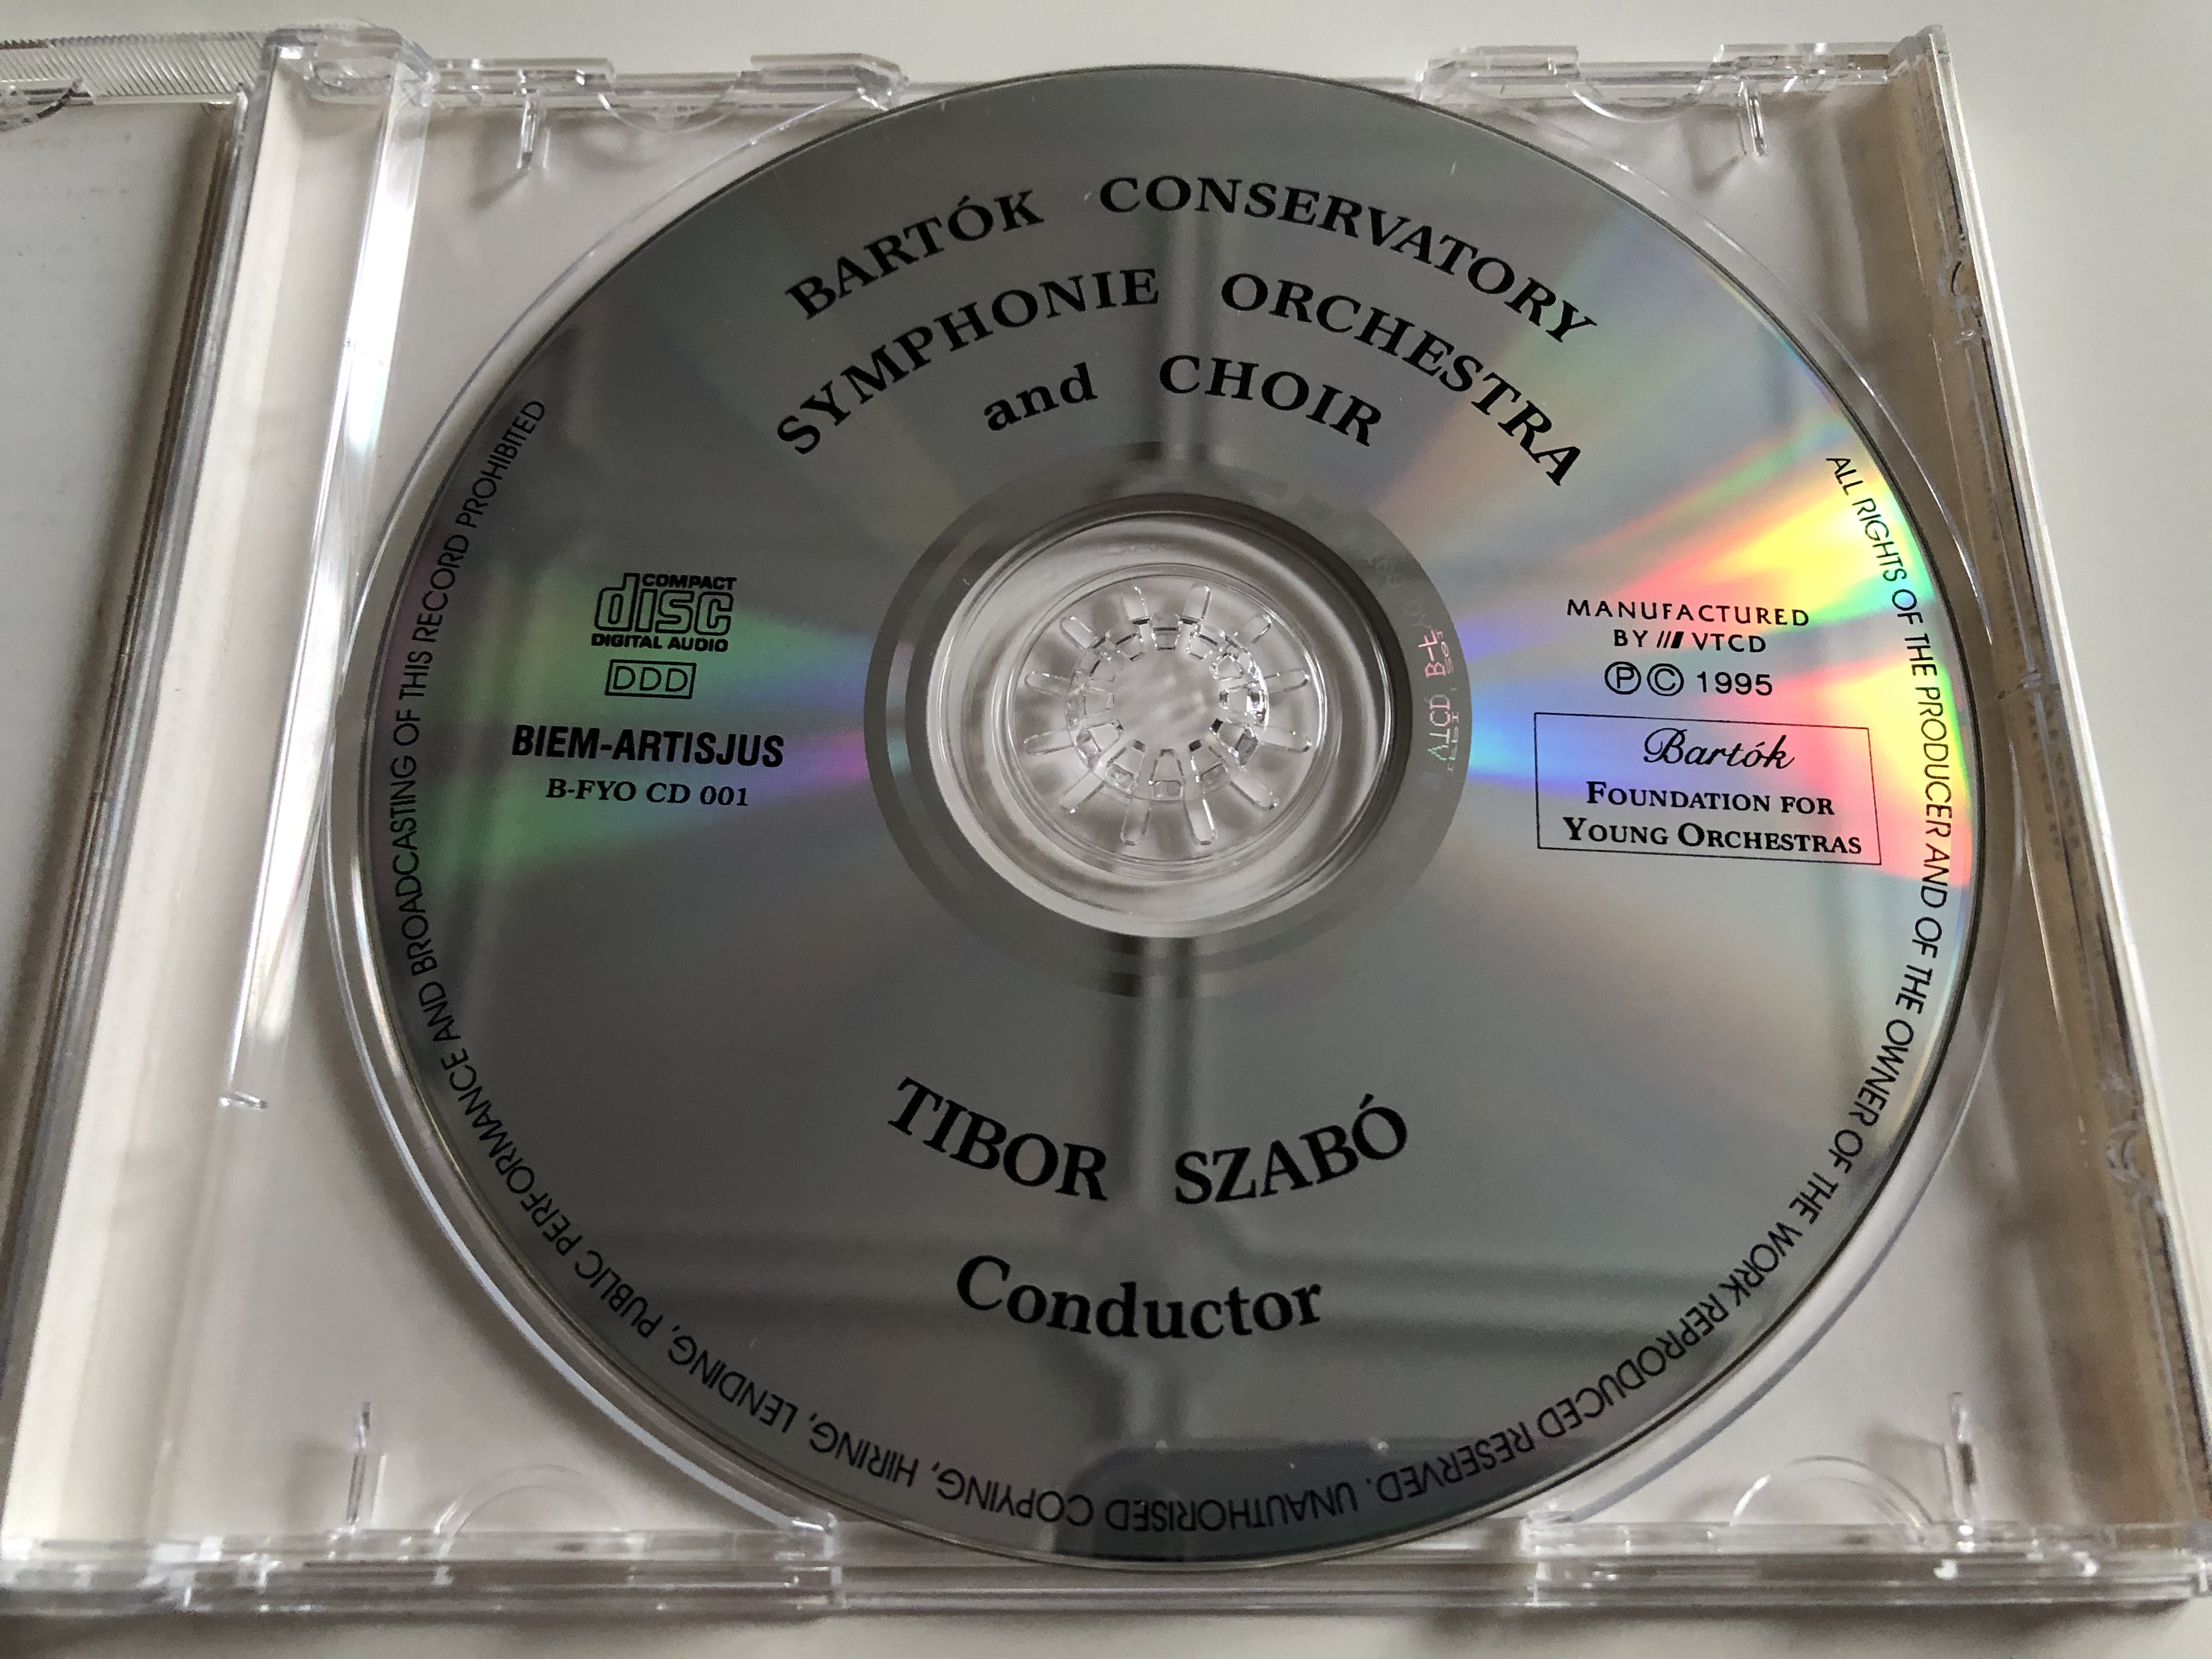 bartok-conservatory-symphonie-orchestra-and-choir-budapest-hungary-jozsef-soproni-missa-choralis-1992-mozart-missa-solemnis-c-moll-k.-139-waisenhaus-messe-conductor-tibor-szabo-6-.jpg